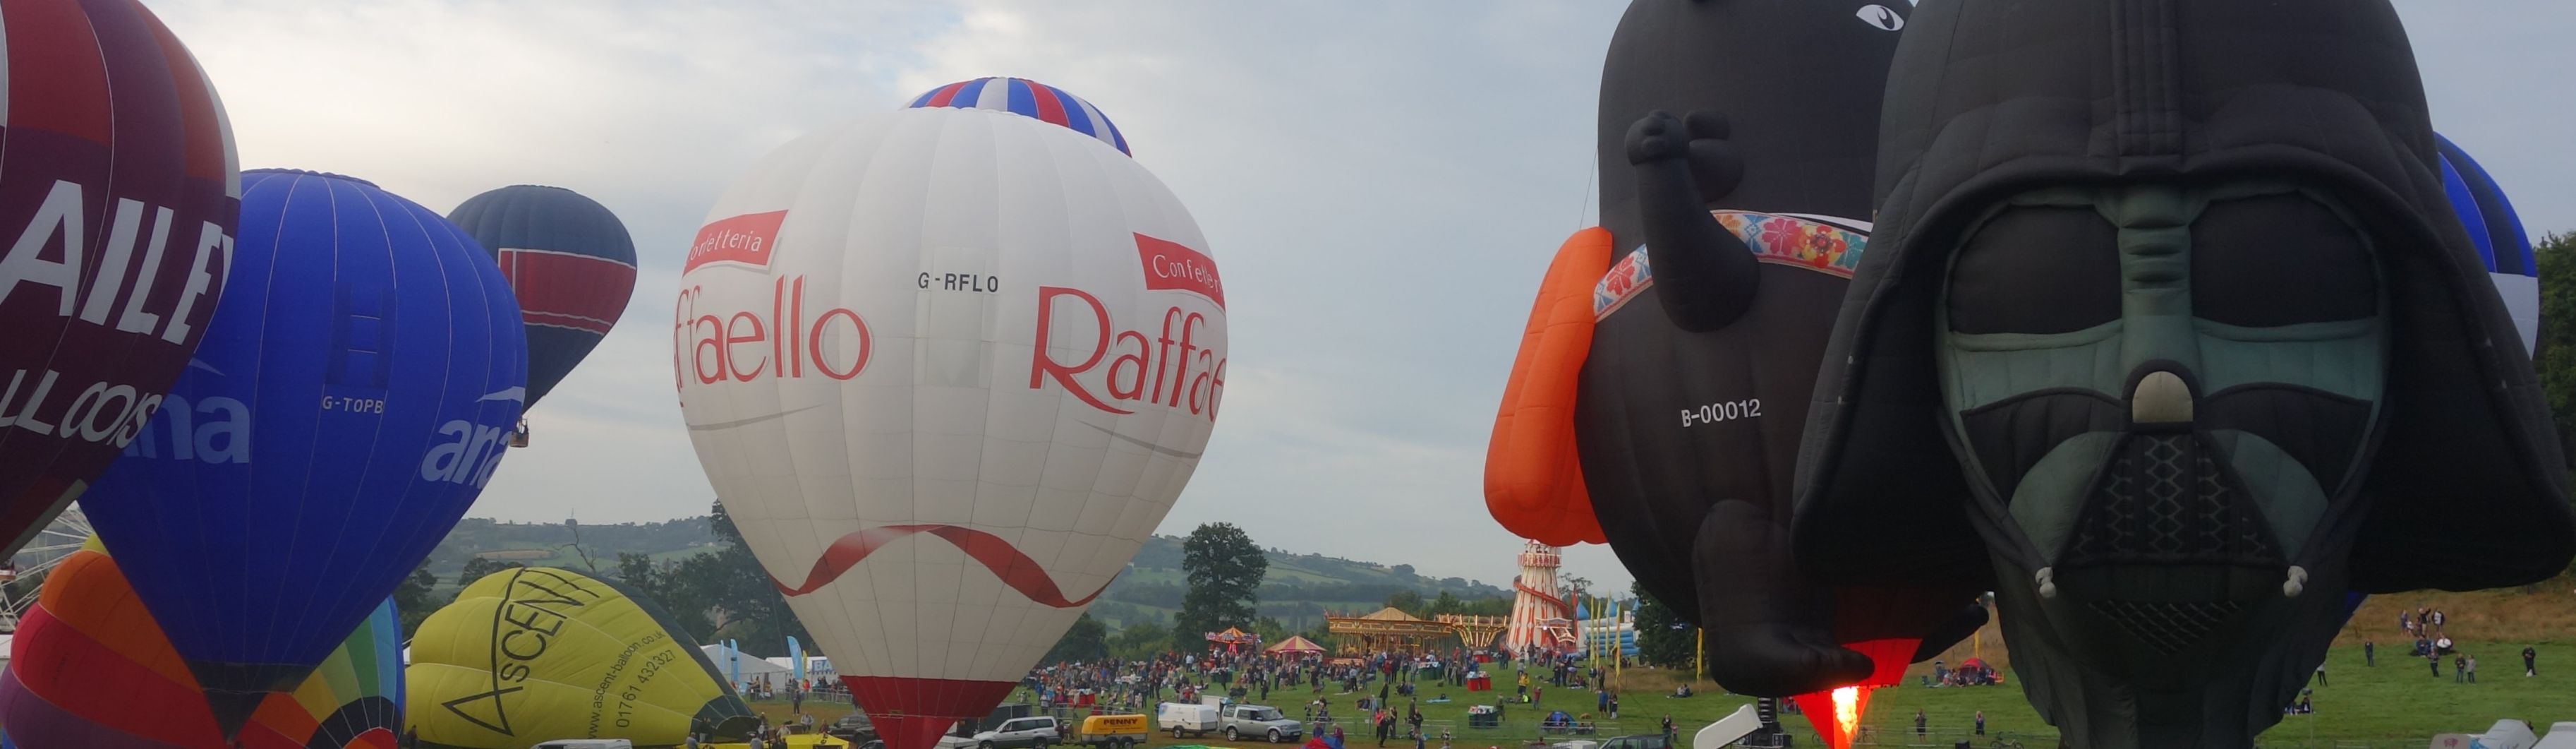 Modieus Hub beha 2019 Bristol Balloon Fiesta Review